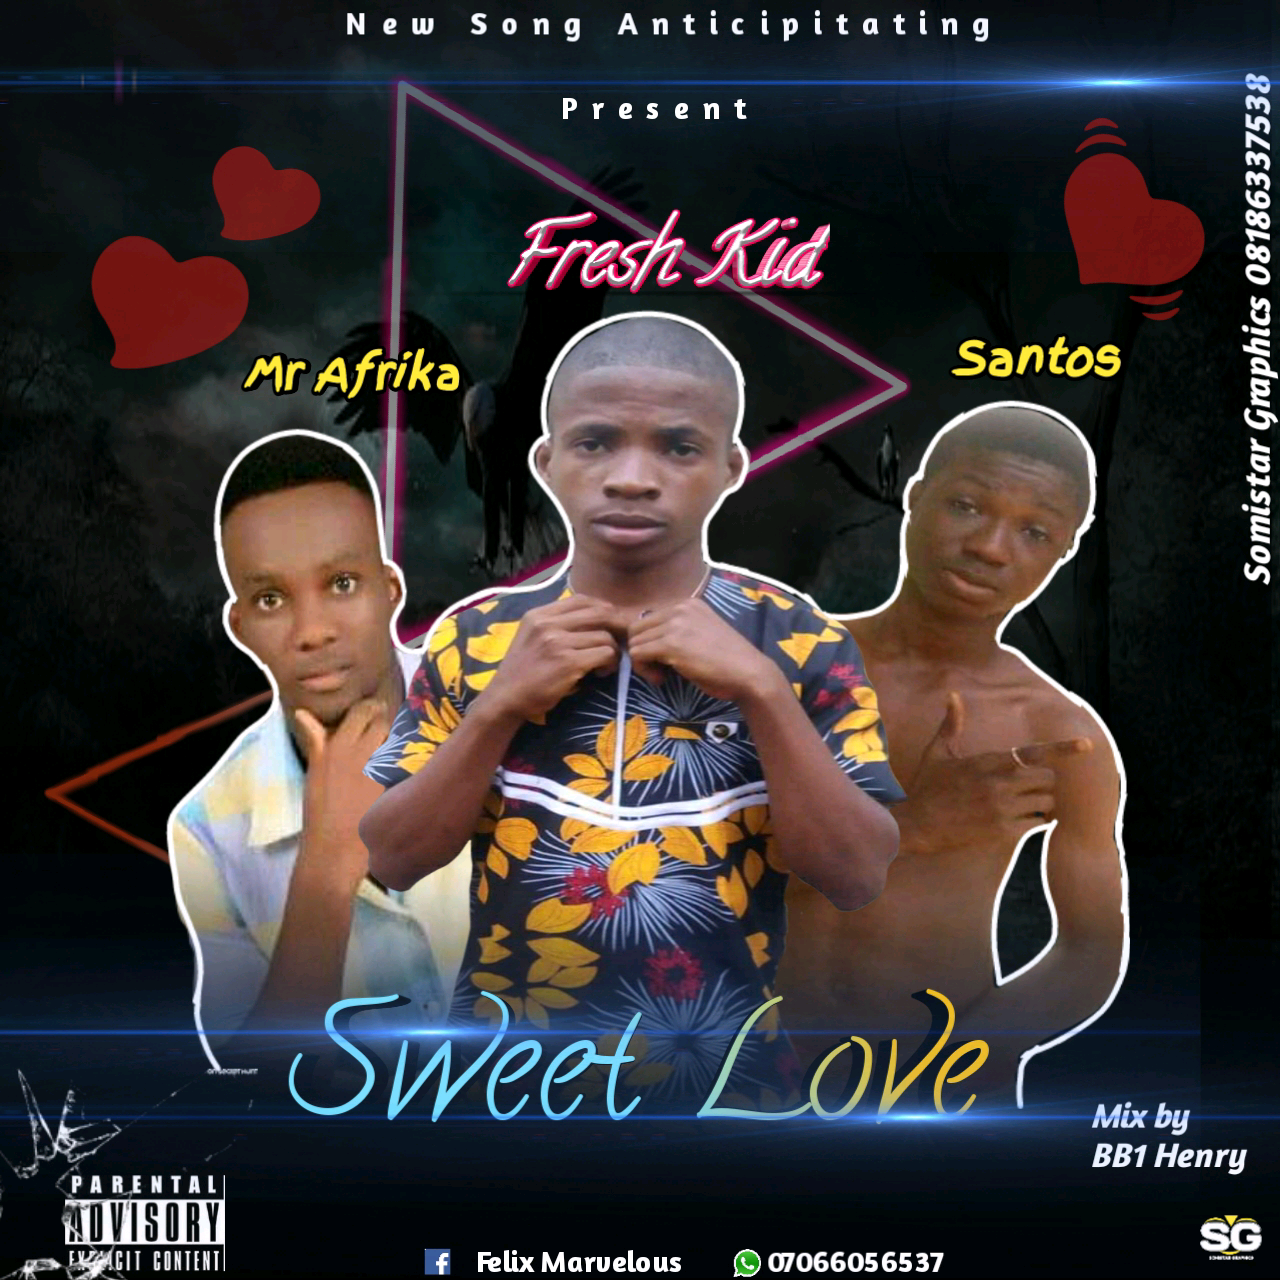 [Music]FRESH KID_(SWEET LOVE)_FT MR AFRIKA $ SANTOS